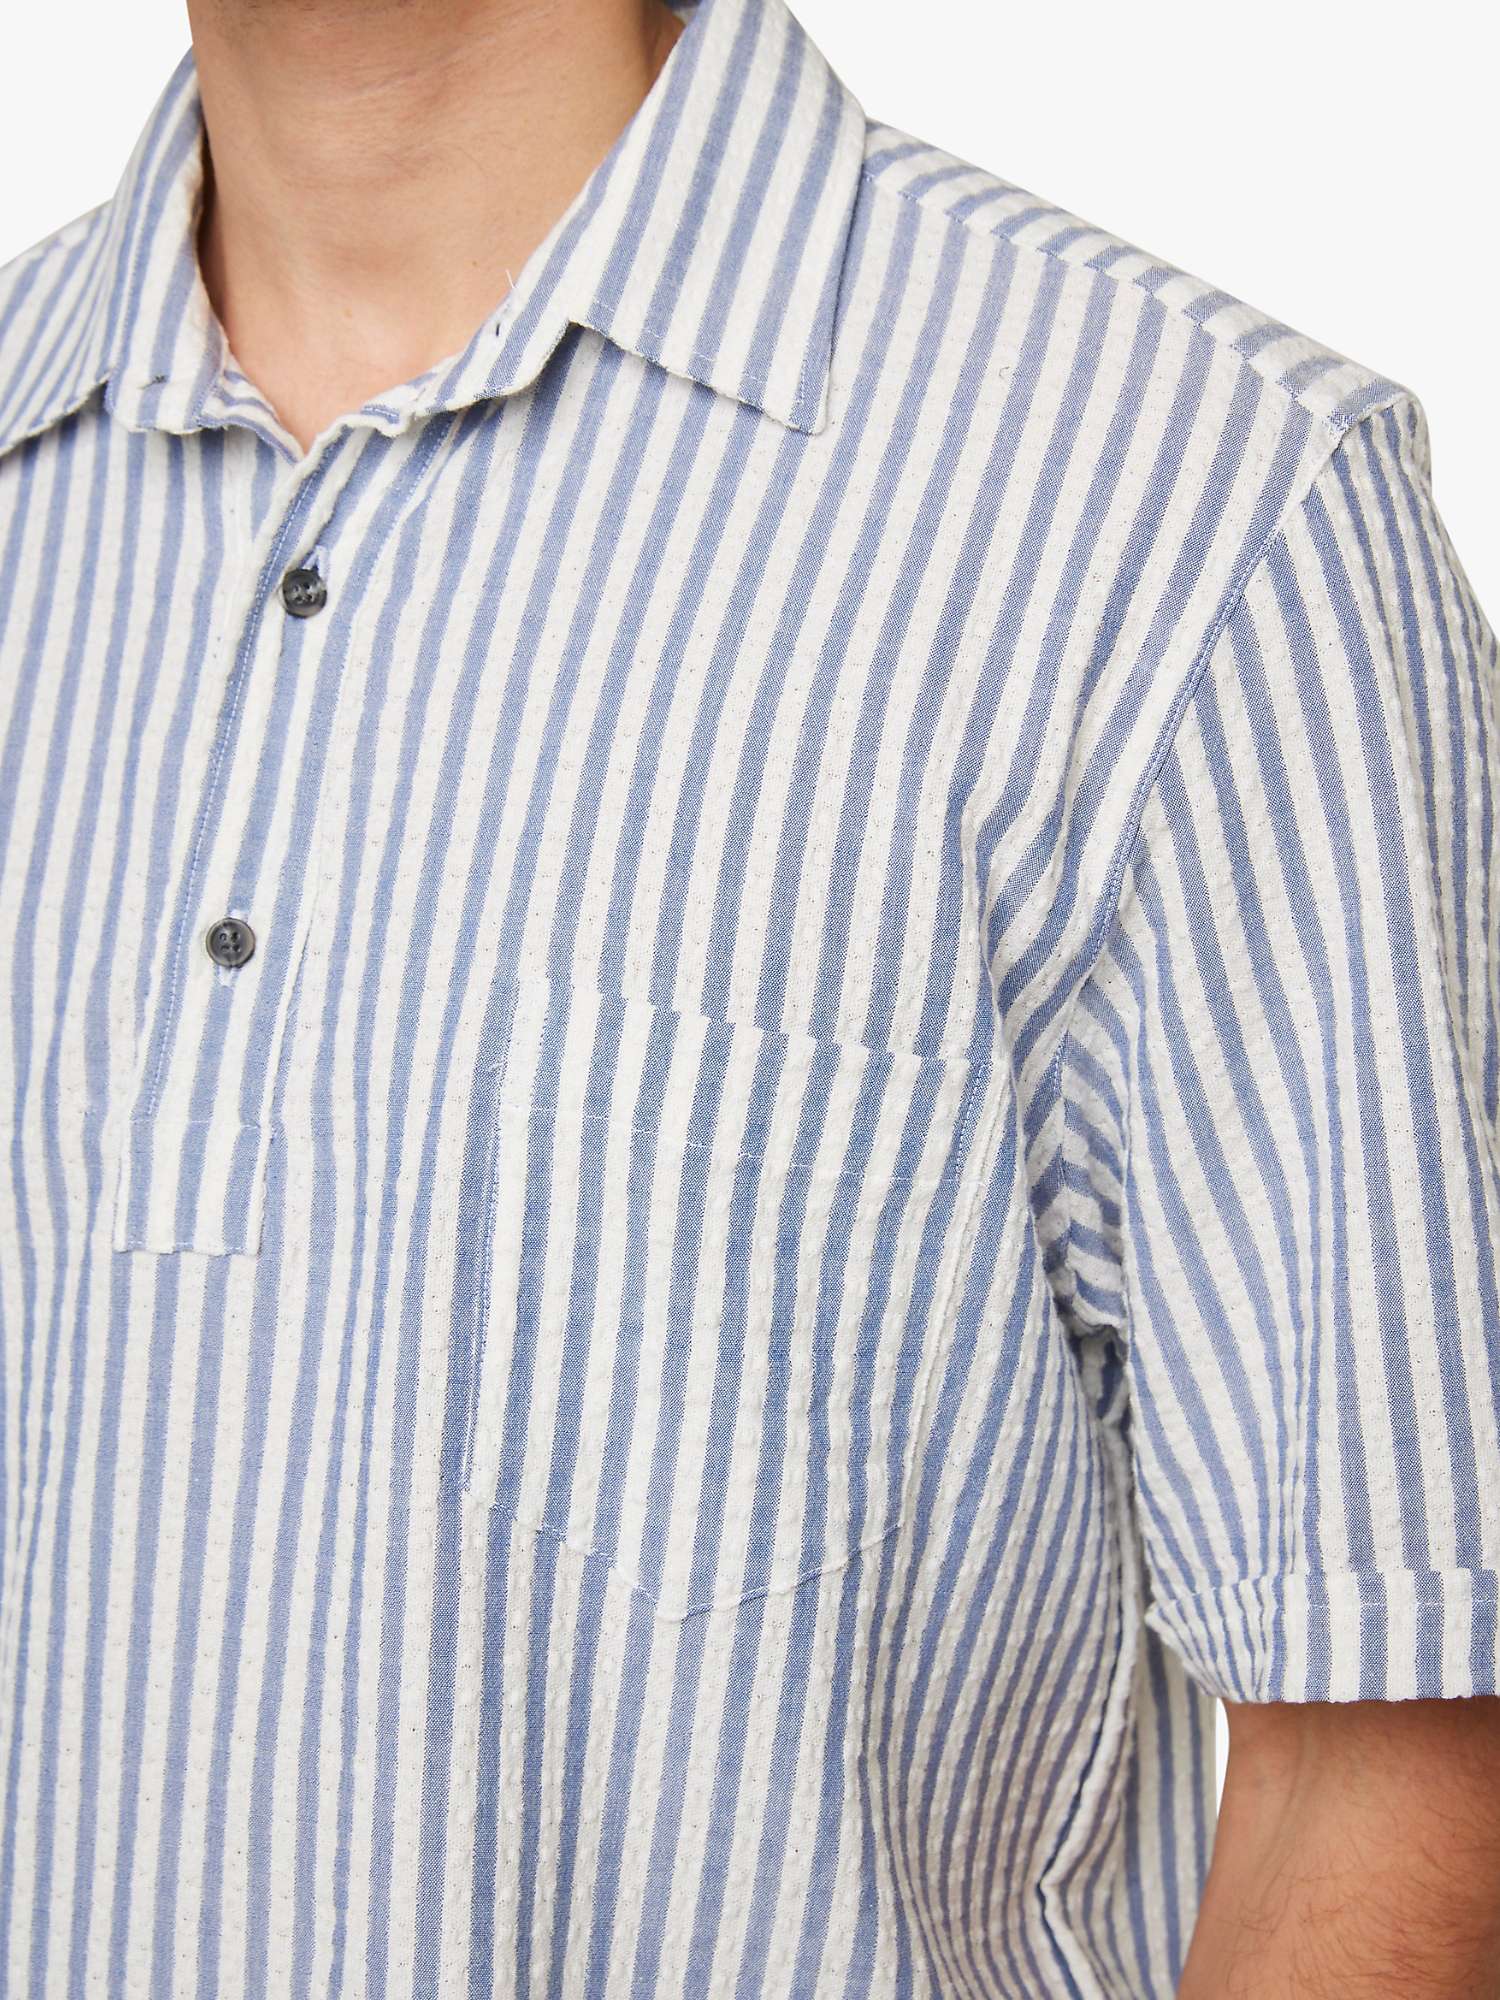 Buy Peregrine Cabin Short Sleeve Shirt, Blue/White Online at johnlewis.com